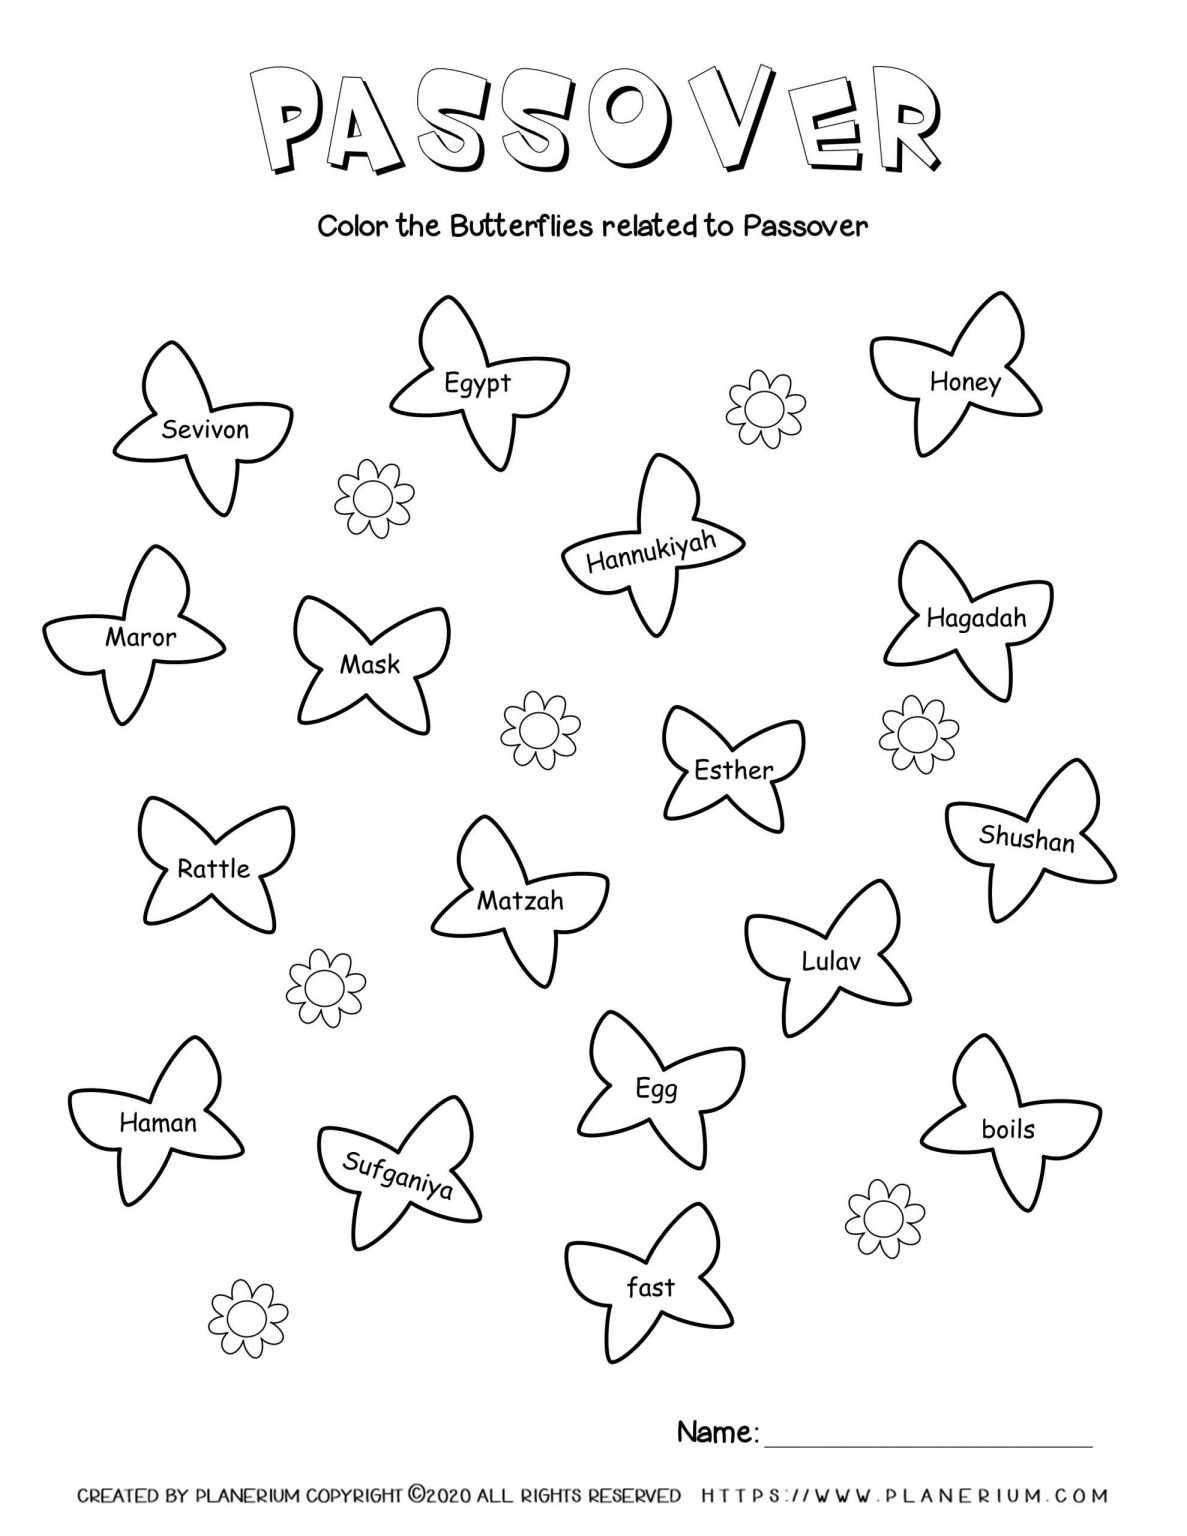 passover-worksheet-butterflies-related-words-planerium